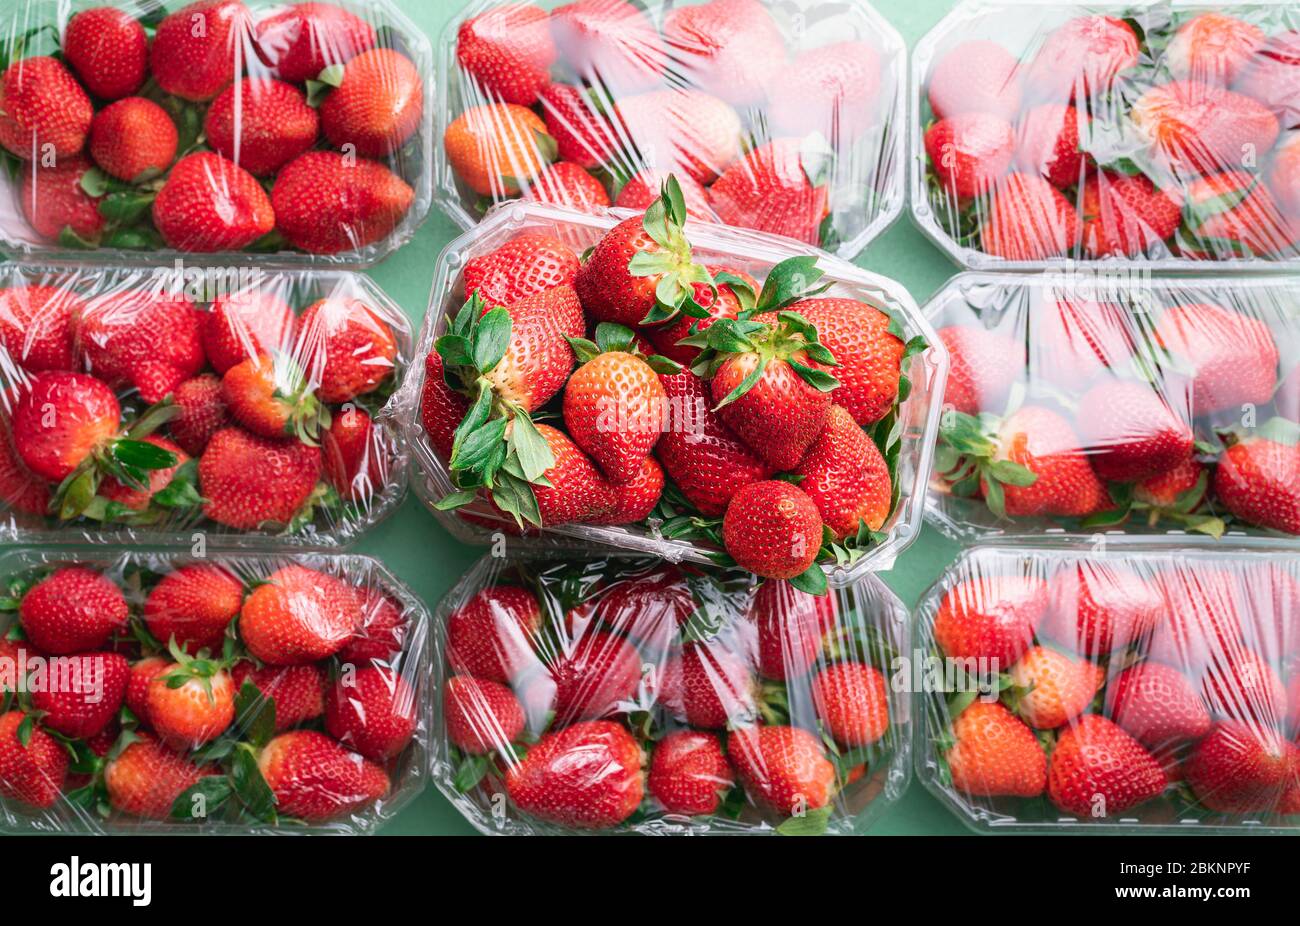 Muchas fresas en cajas listas para comprar. Plano con frutas frescas maduras de fresa. Abundancia de frutos dulces de verano. Concepto de la temporada de fresa. Foto de stock